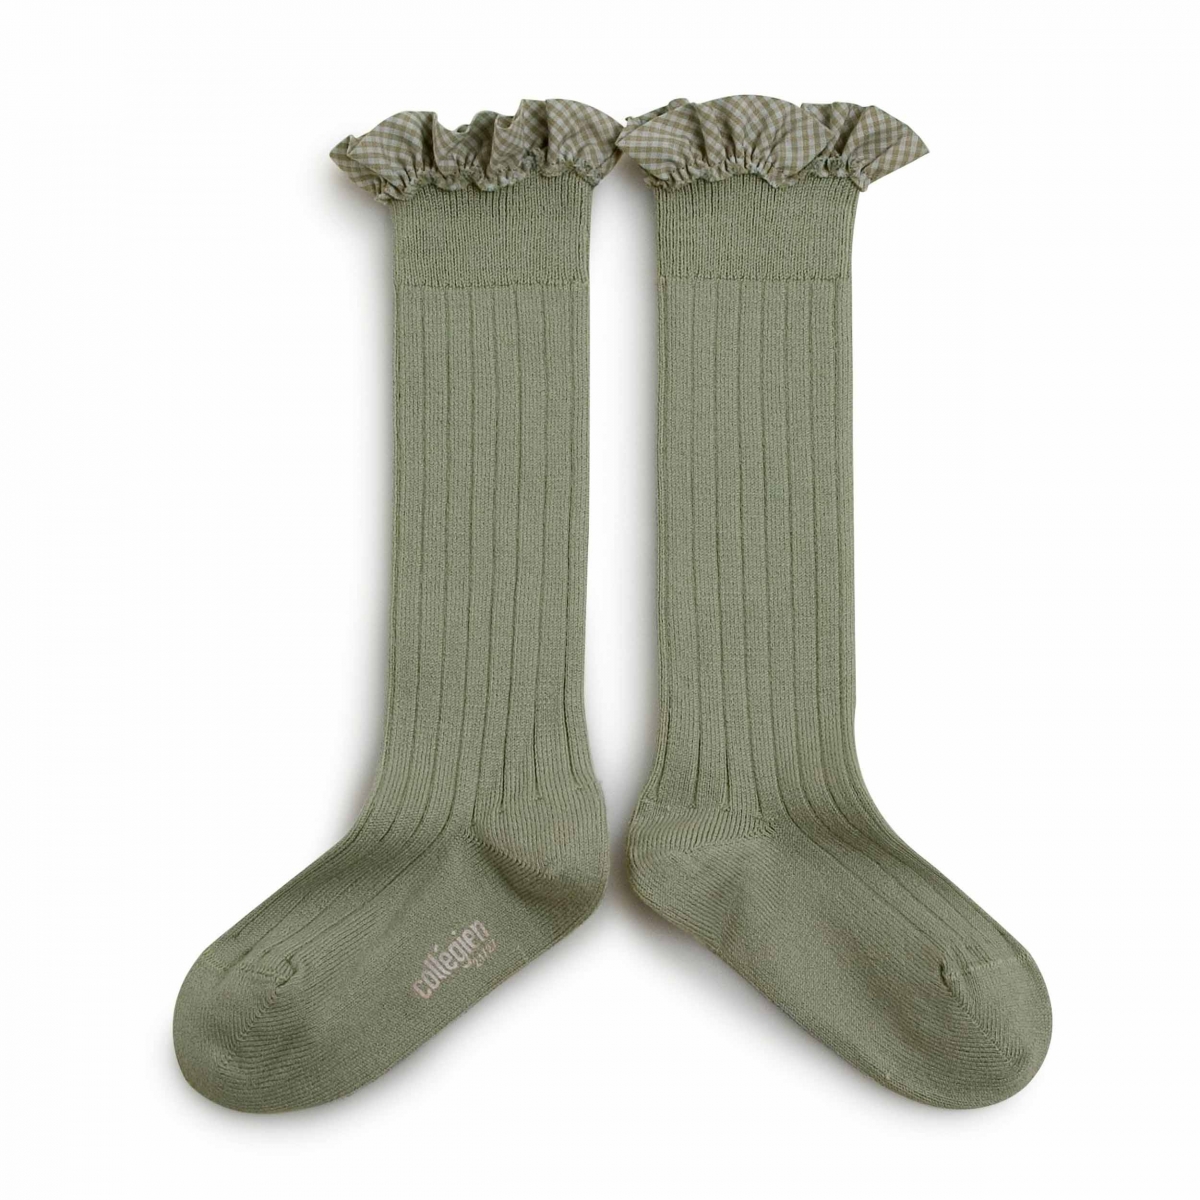 Collégien - Knee high socks Apolline sauge - タイツと靴下 - 2961 188 Apolline 